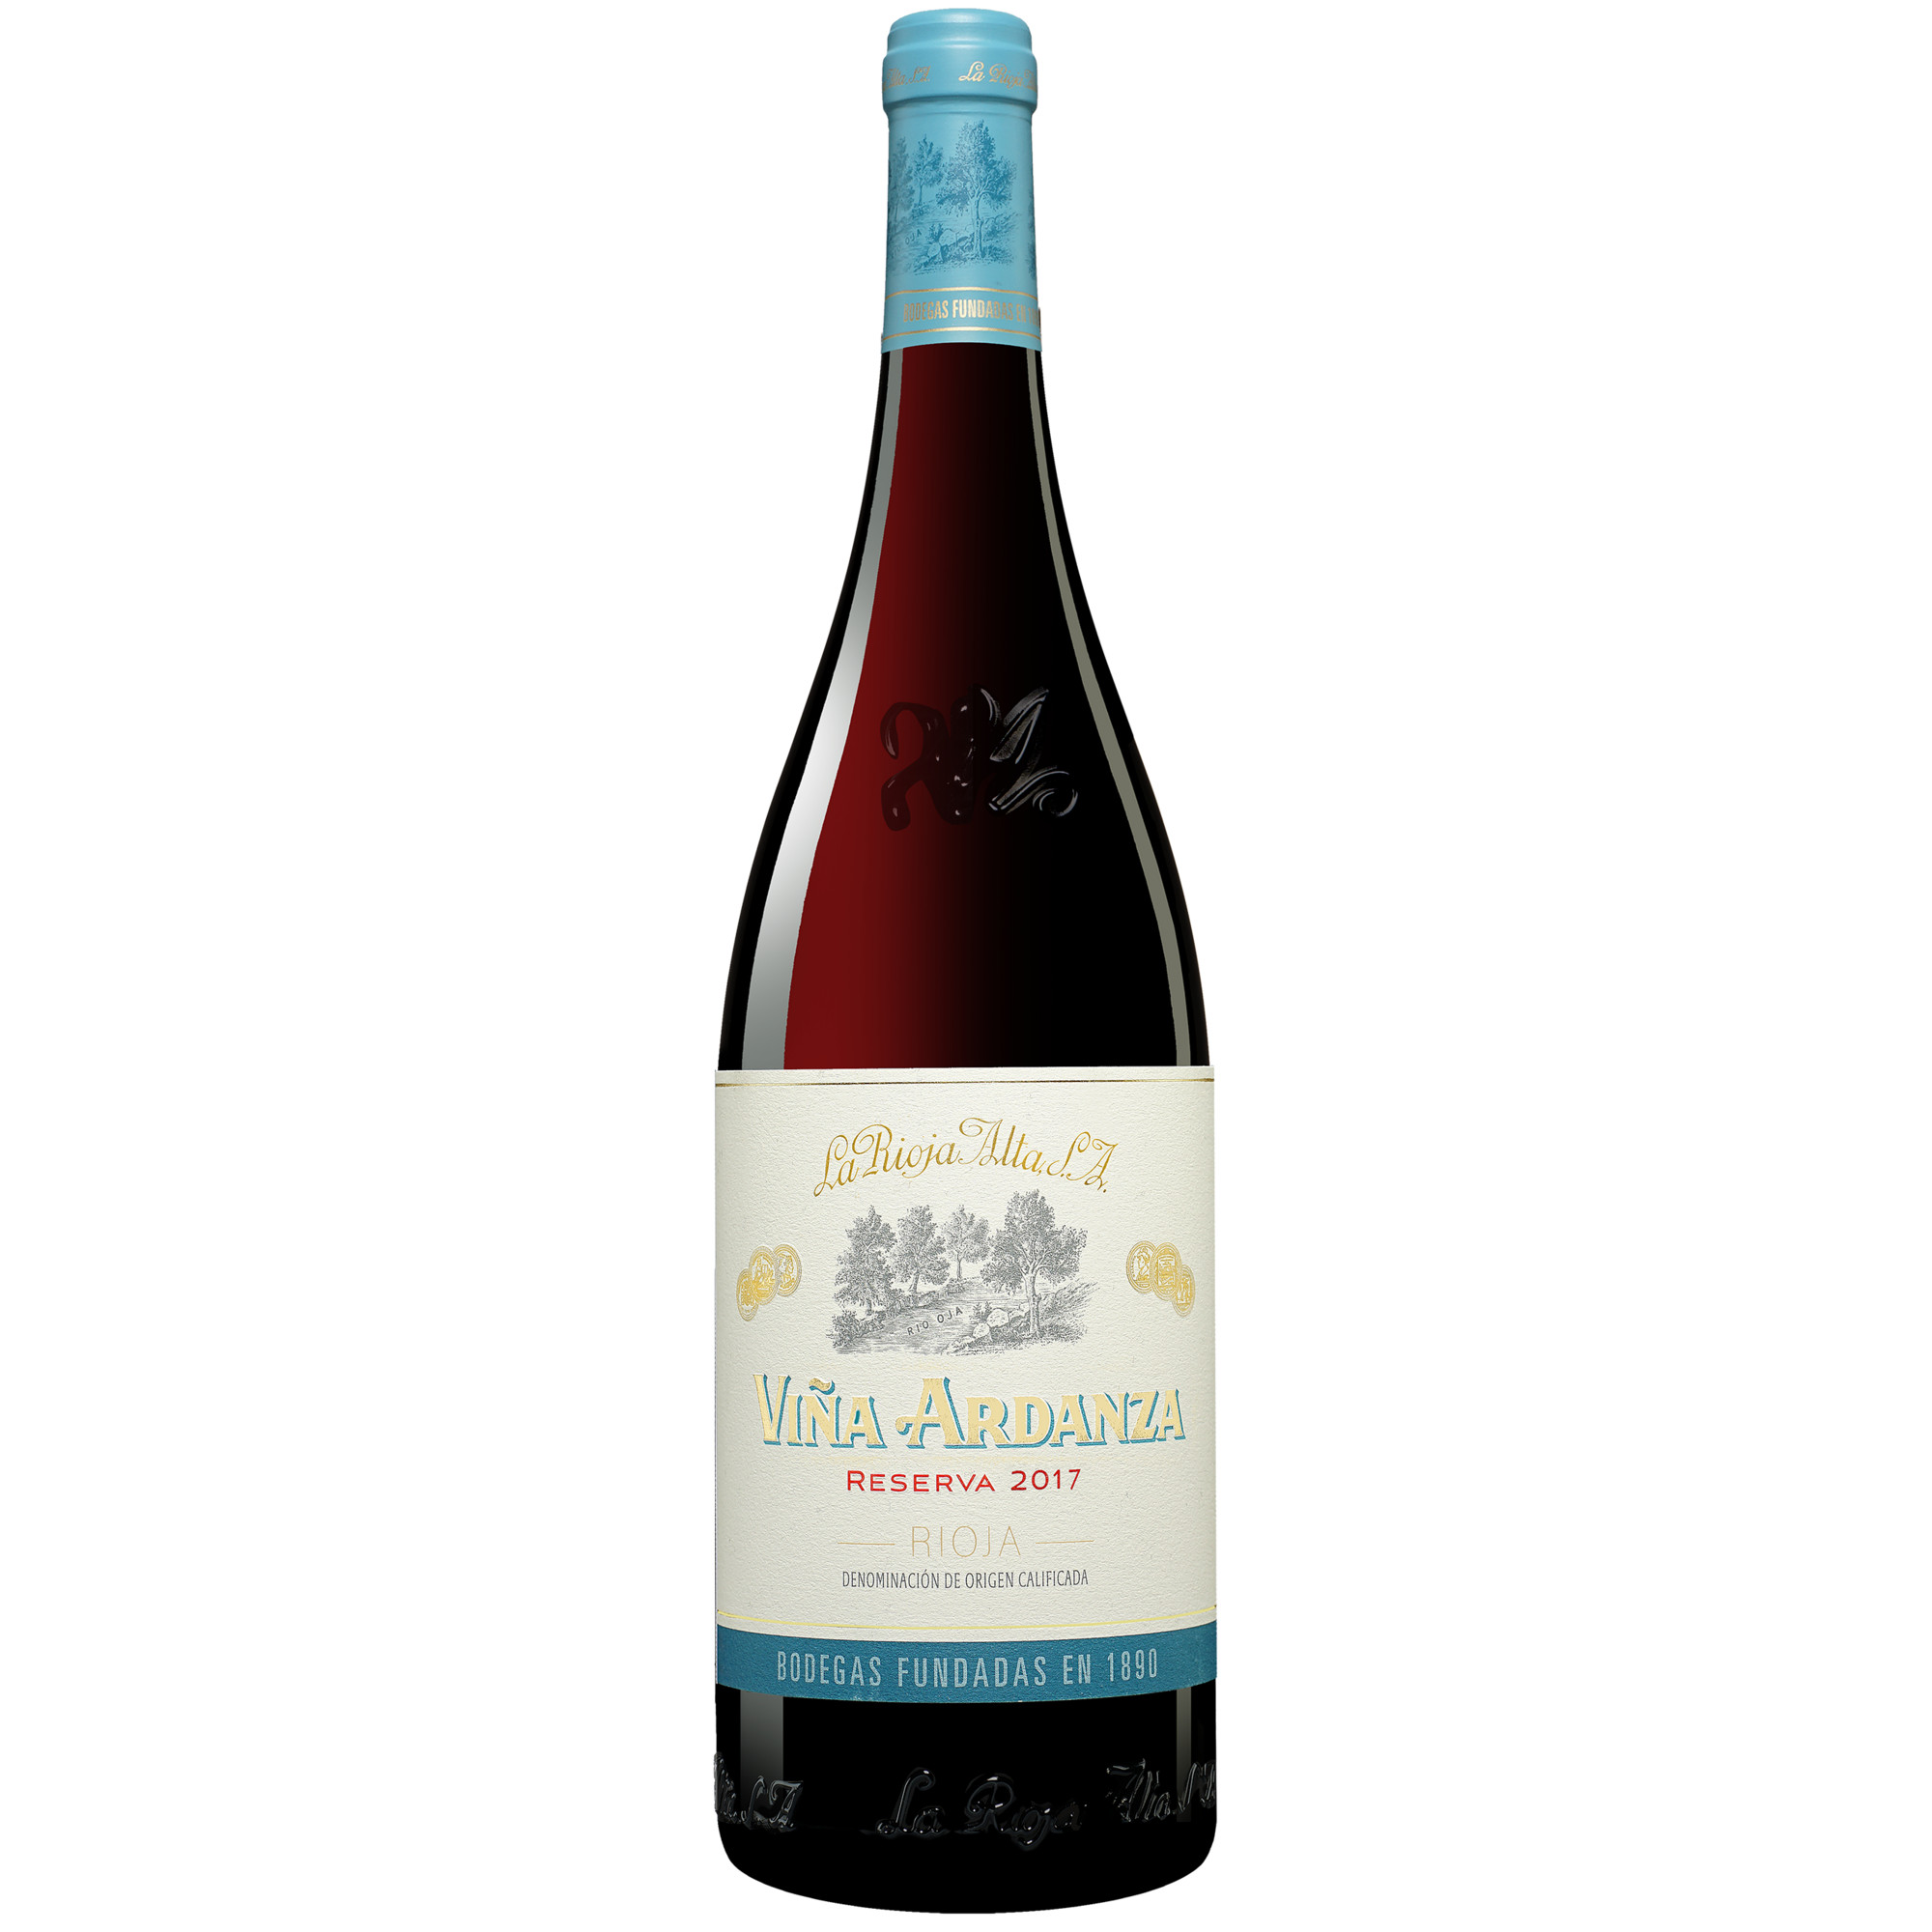 La Rioja Alta »Viña Ardanza« Reserva 2017  014.5% Vol. Rotwein Trocken aus Spanien